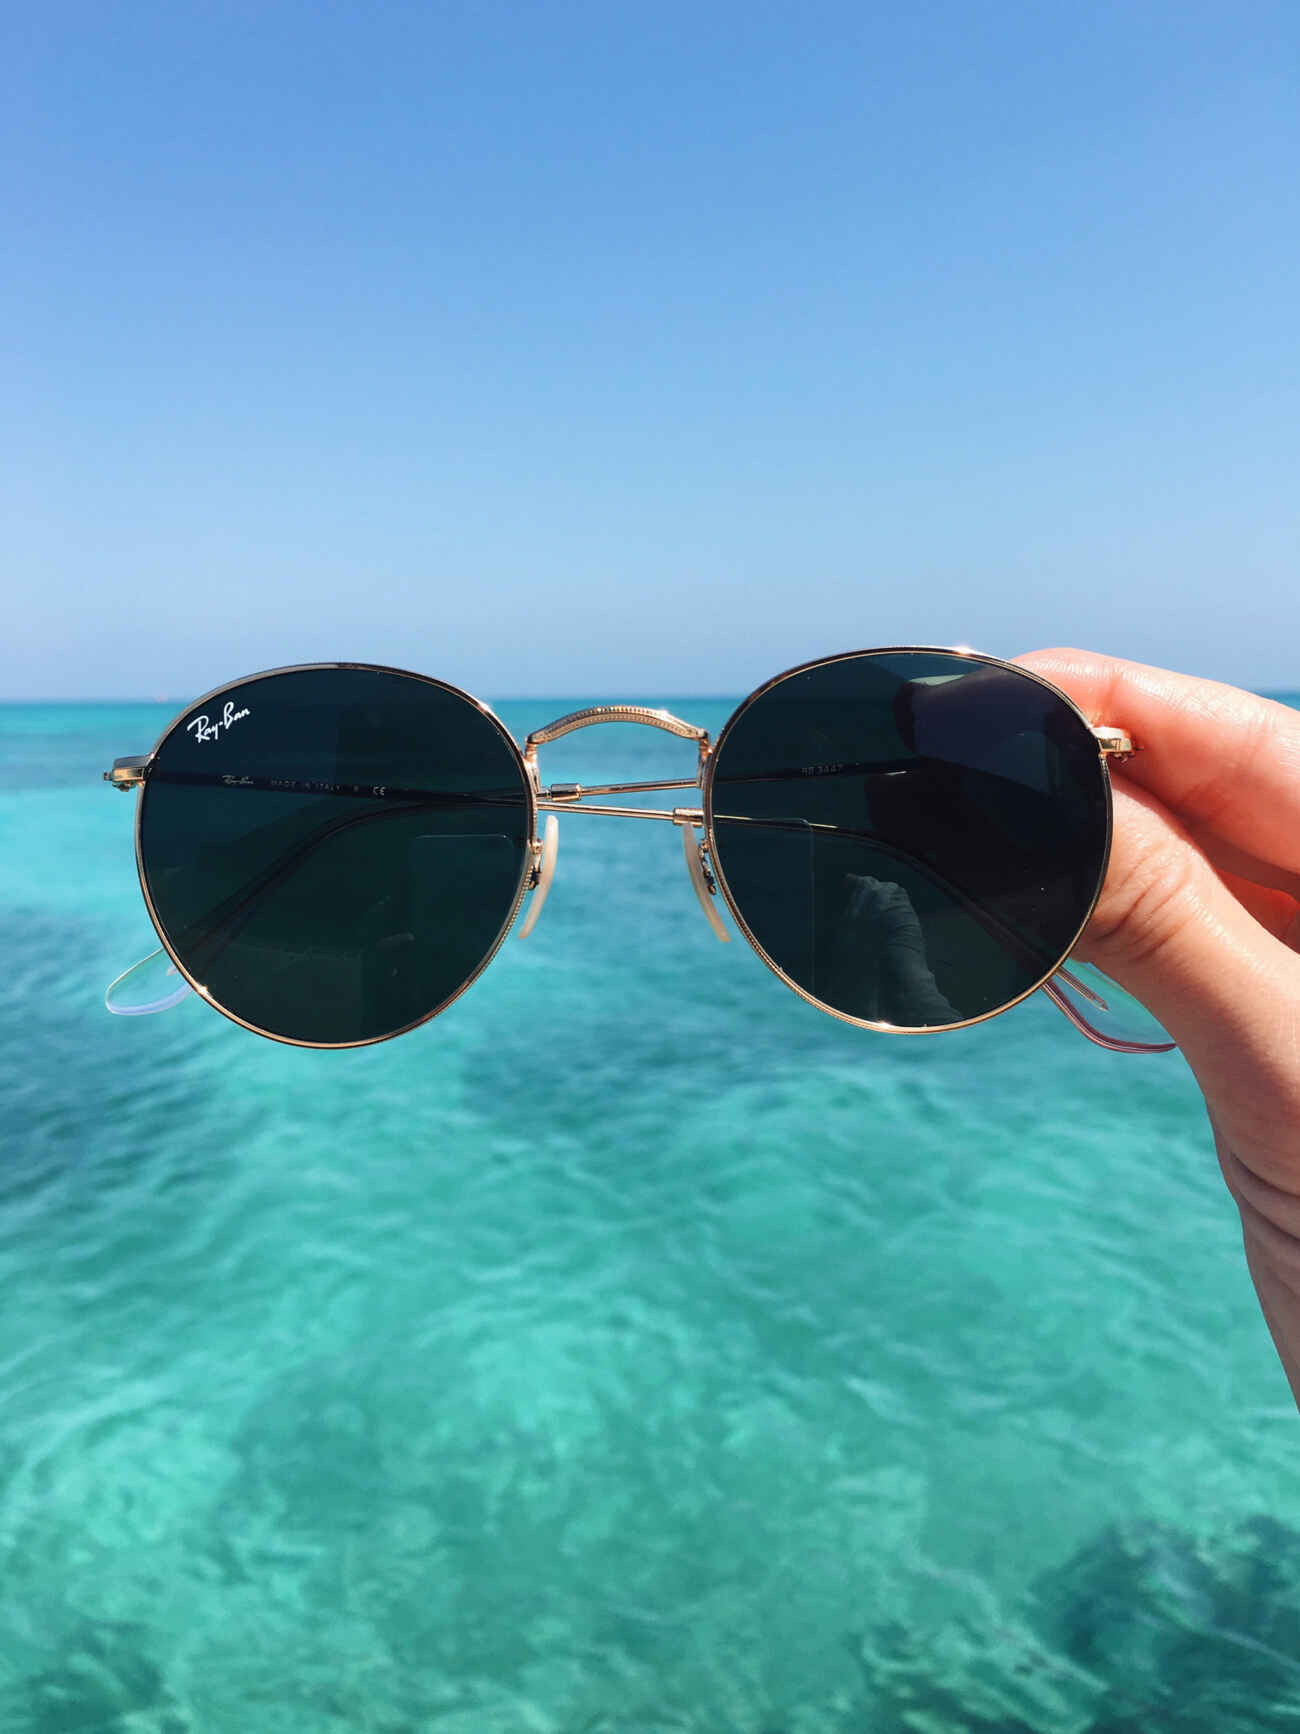 Ray Ban Icon Sunglasses Vacation Wear